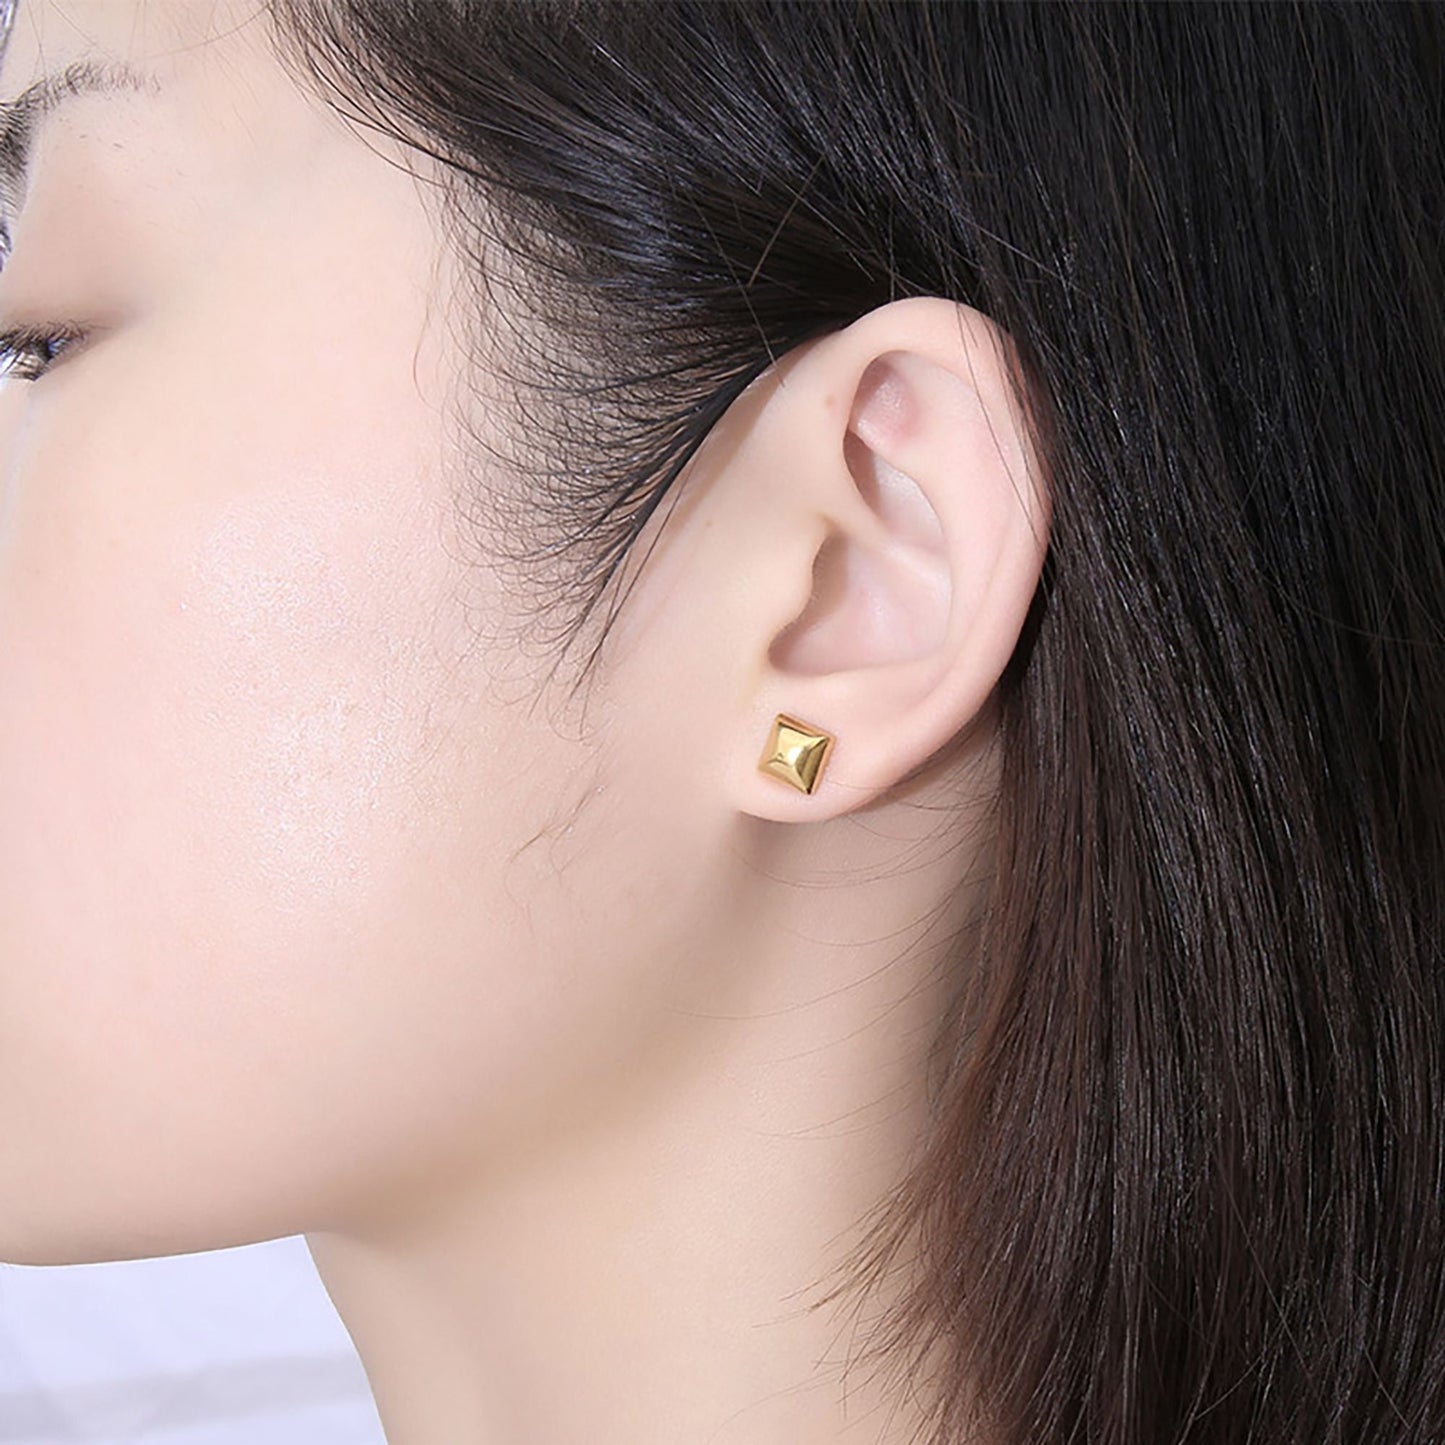 Titanium Square Stud Earrings, Non Tarnish, stud earring, Hypoallergenic, Implant Grade Waterproof Earrings, Minimal Earrings